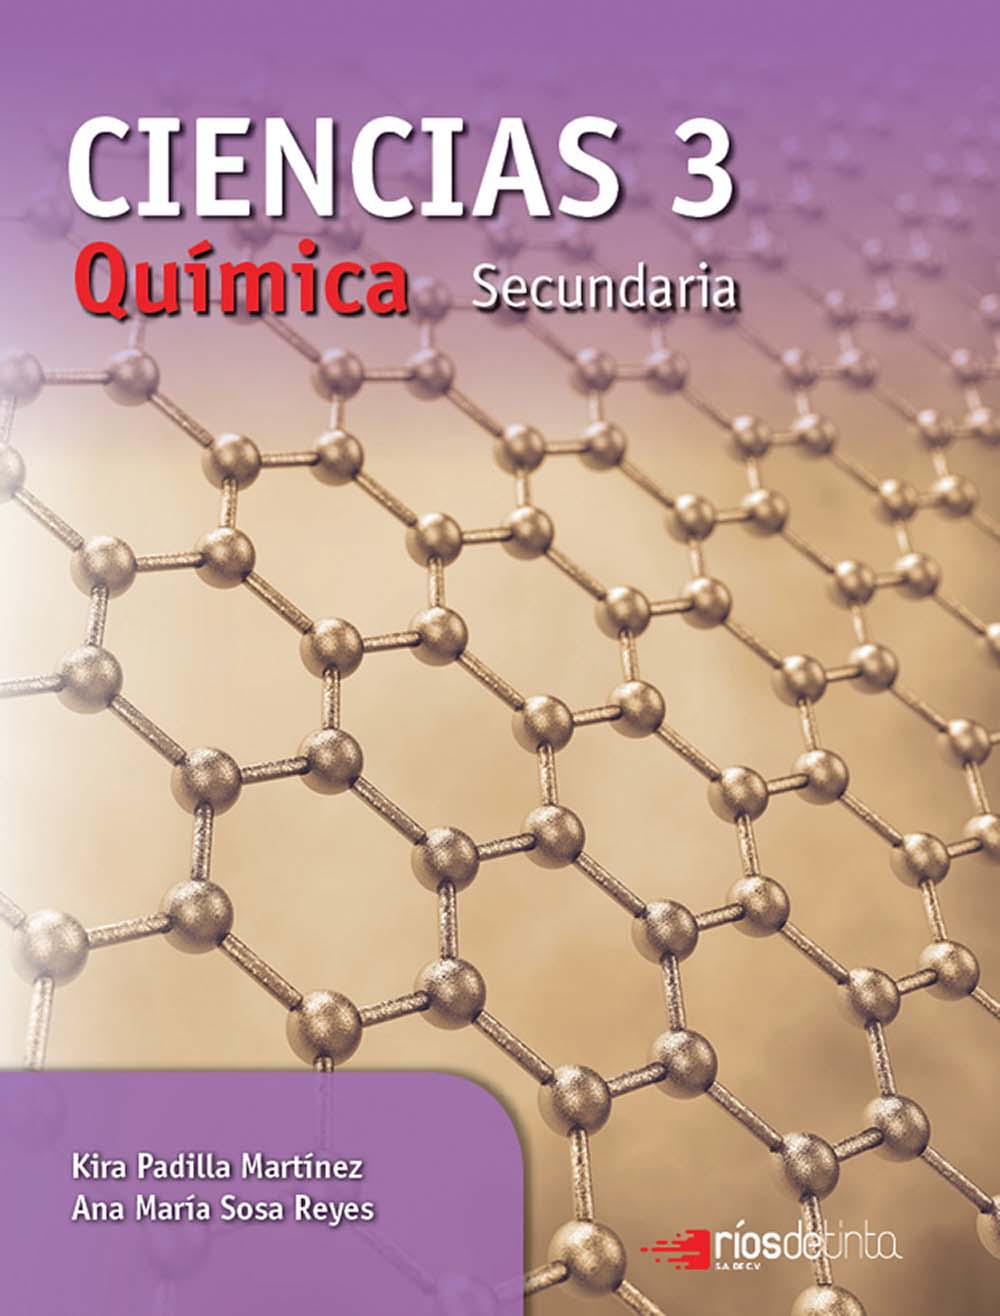 Ciencias 3. Química. Secundaria, Editorial: Ríos de Tinta, Nivel: Secundaria, Grado: 3